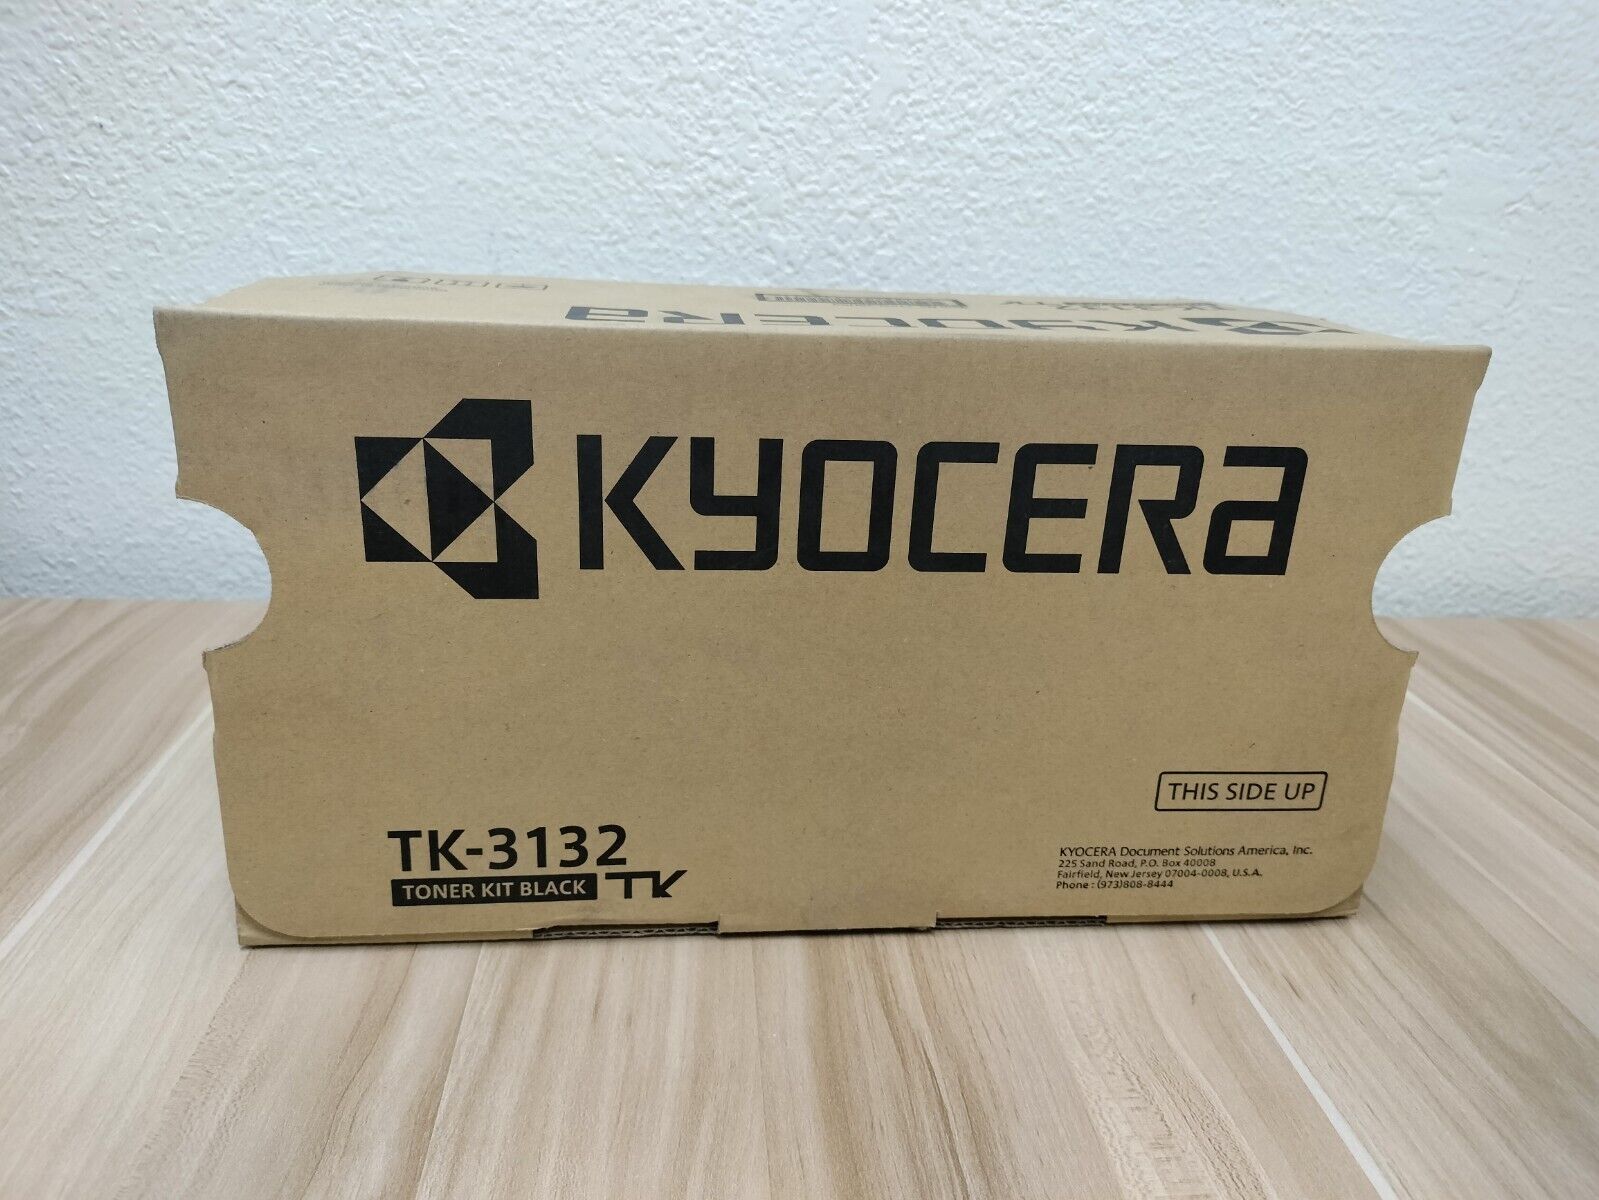 Kyocera TK-3132 TONER KIT BLACK